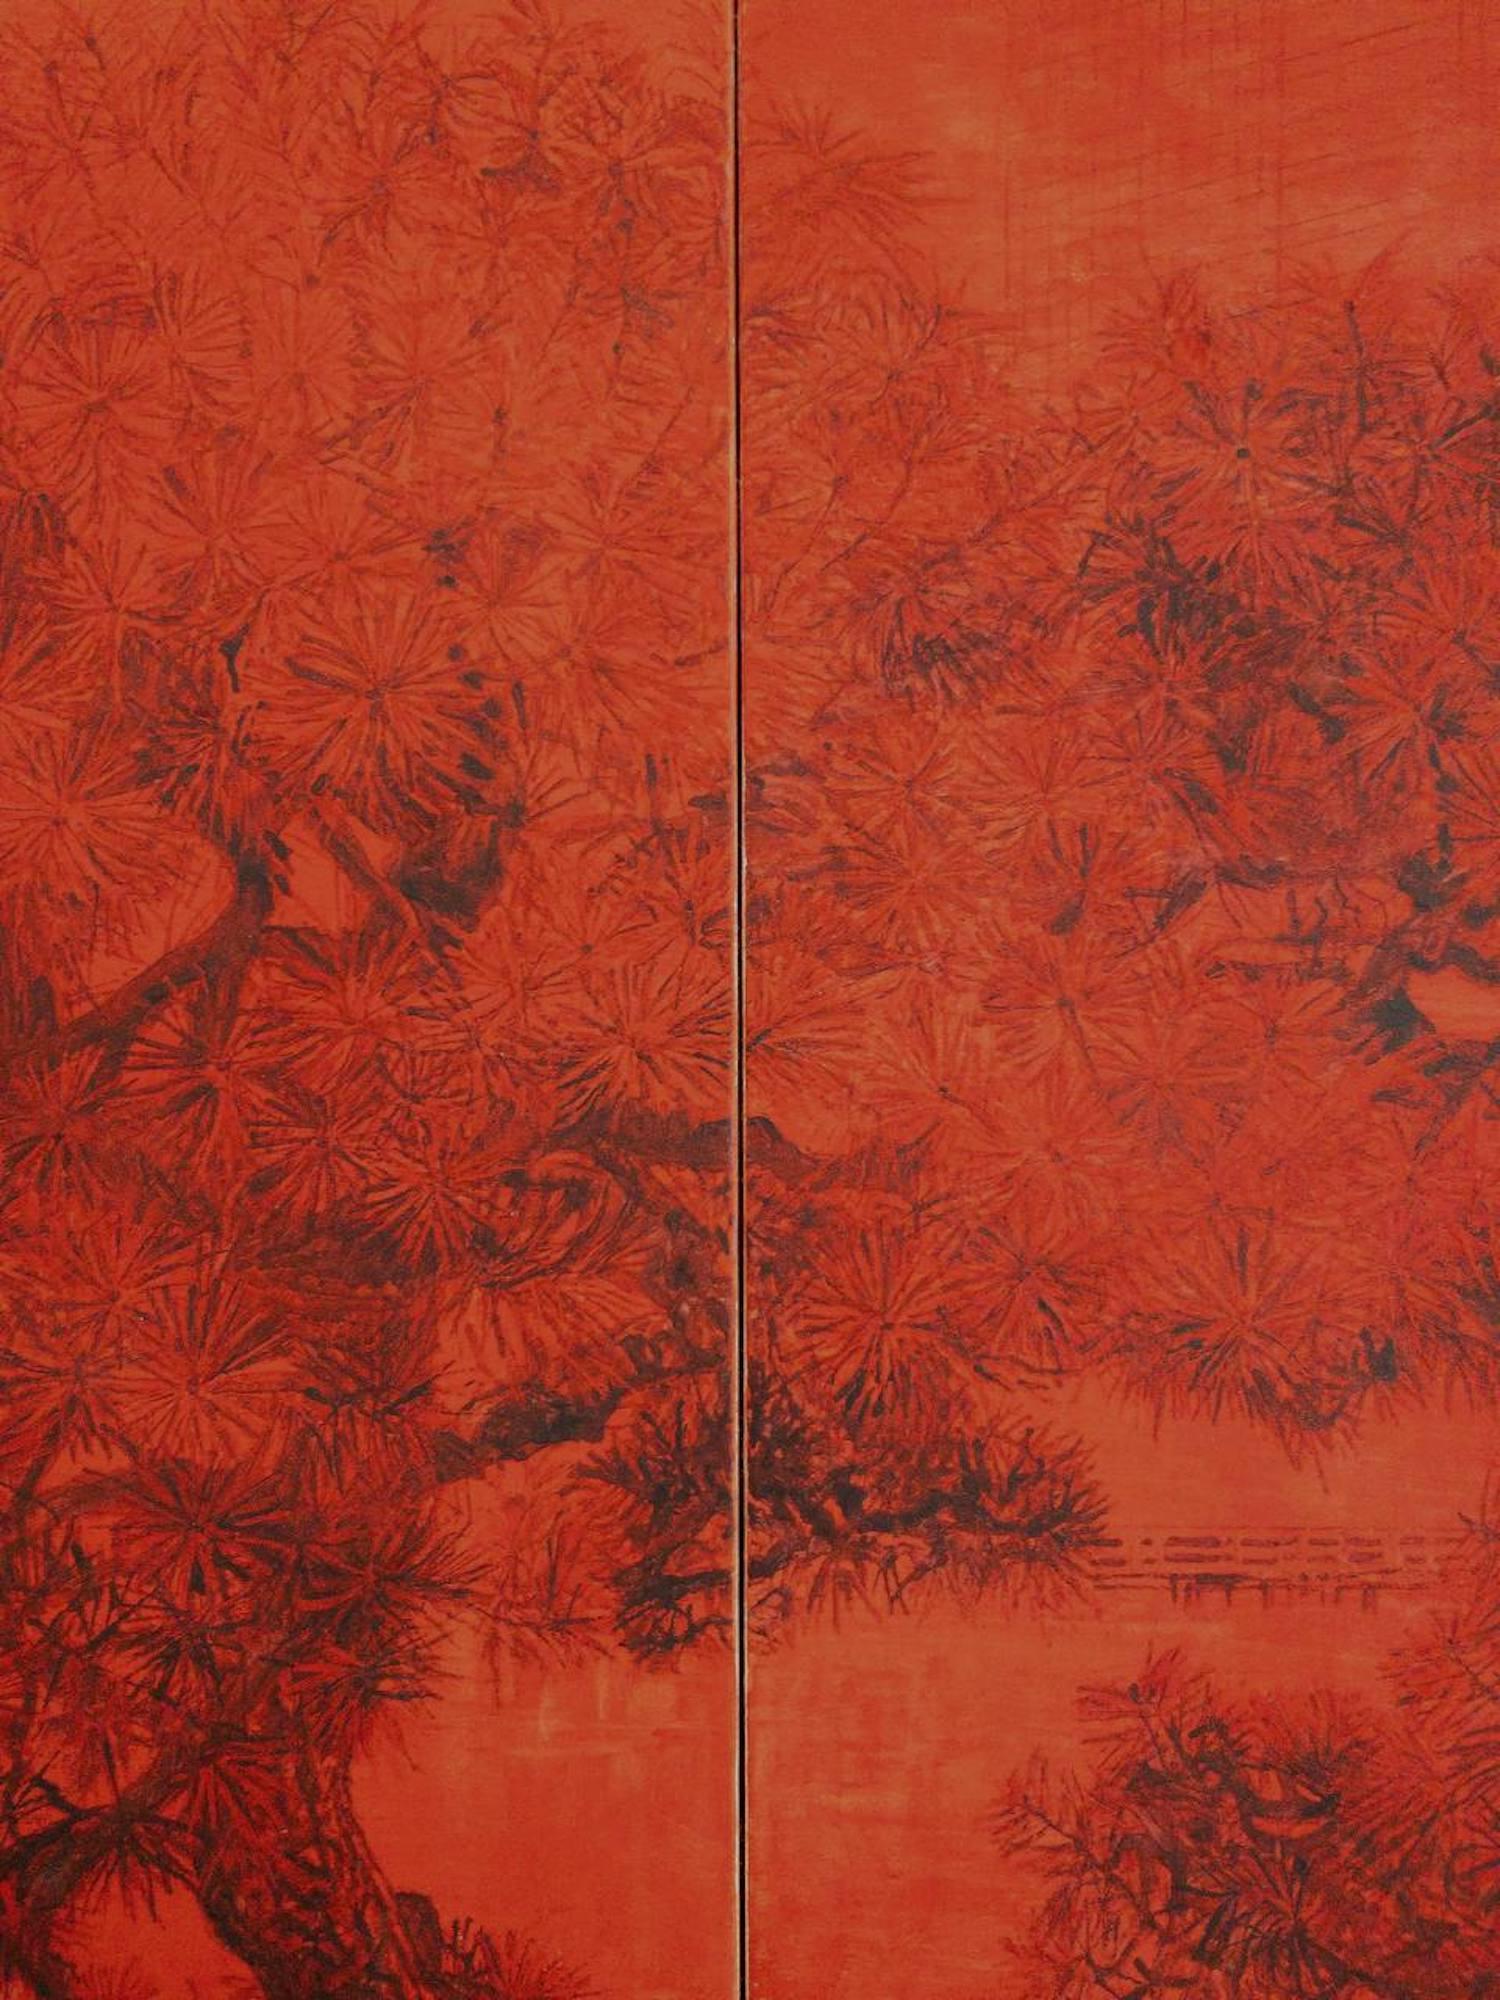 Urban landscape II, Tokyo by Lumi Mizutani - Japanese garden painting, red For Sale 3